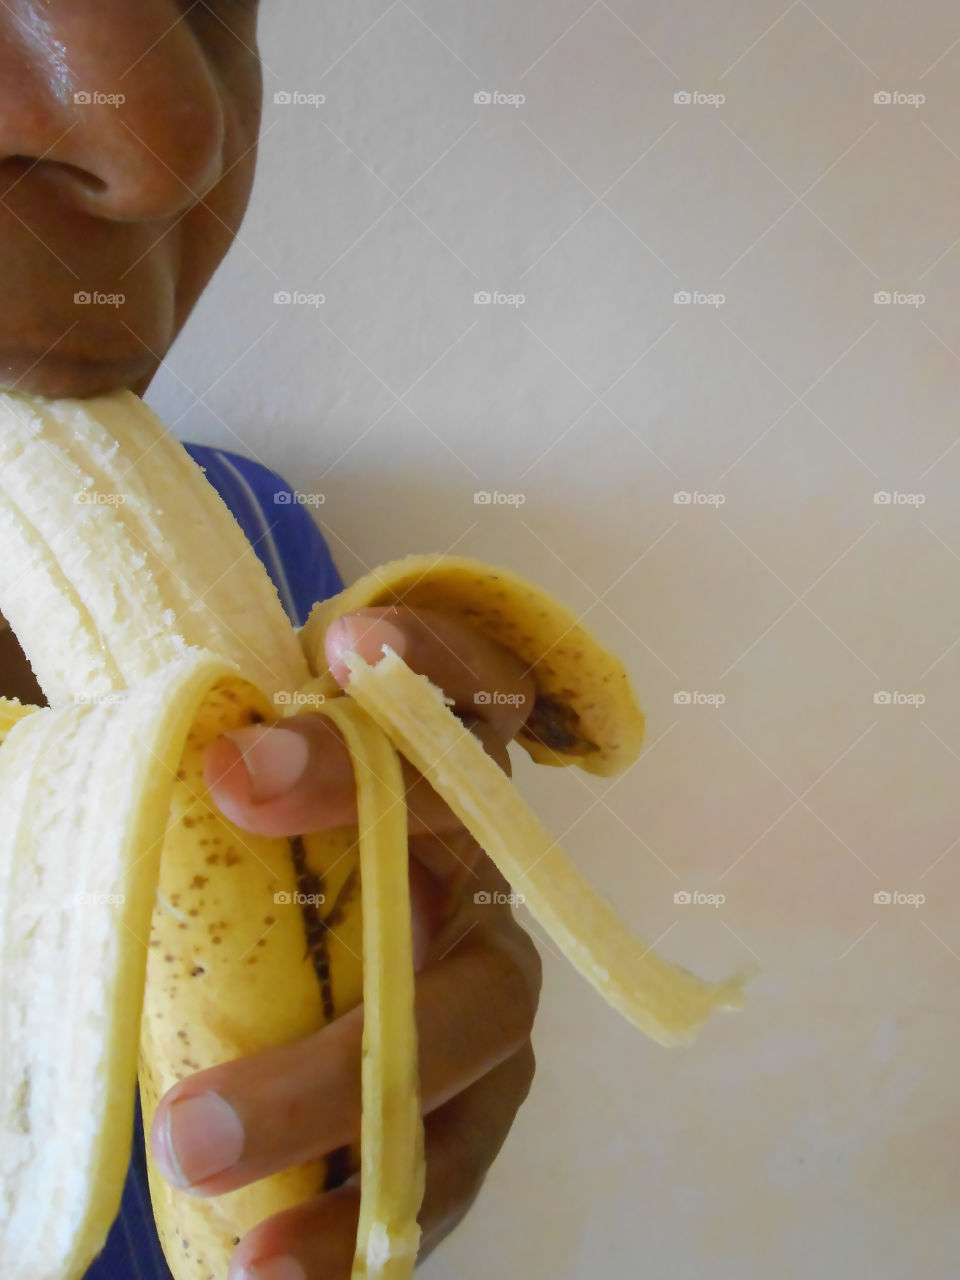 Eating Ripe Banana